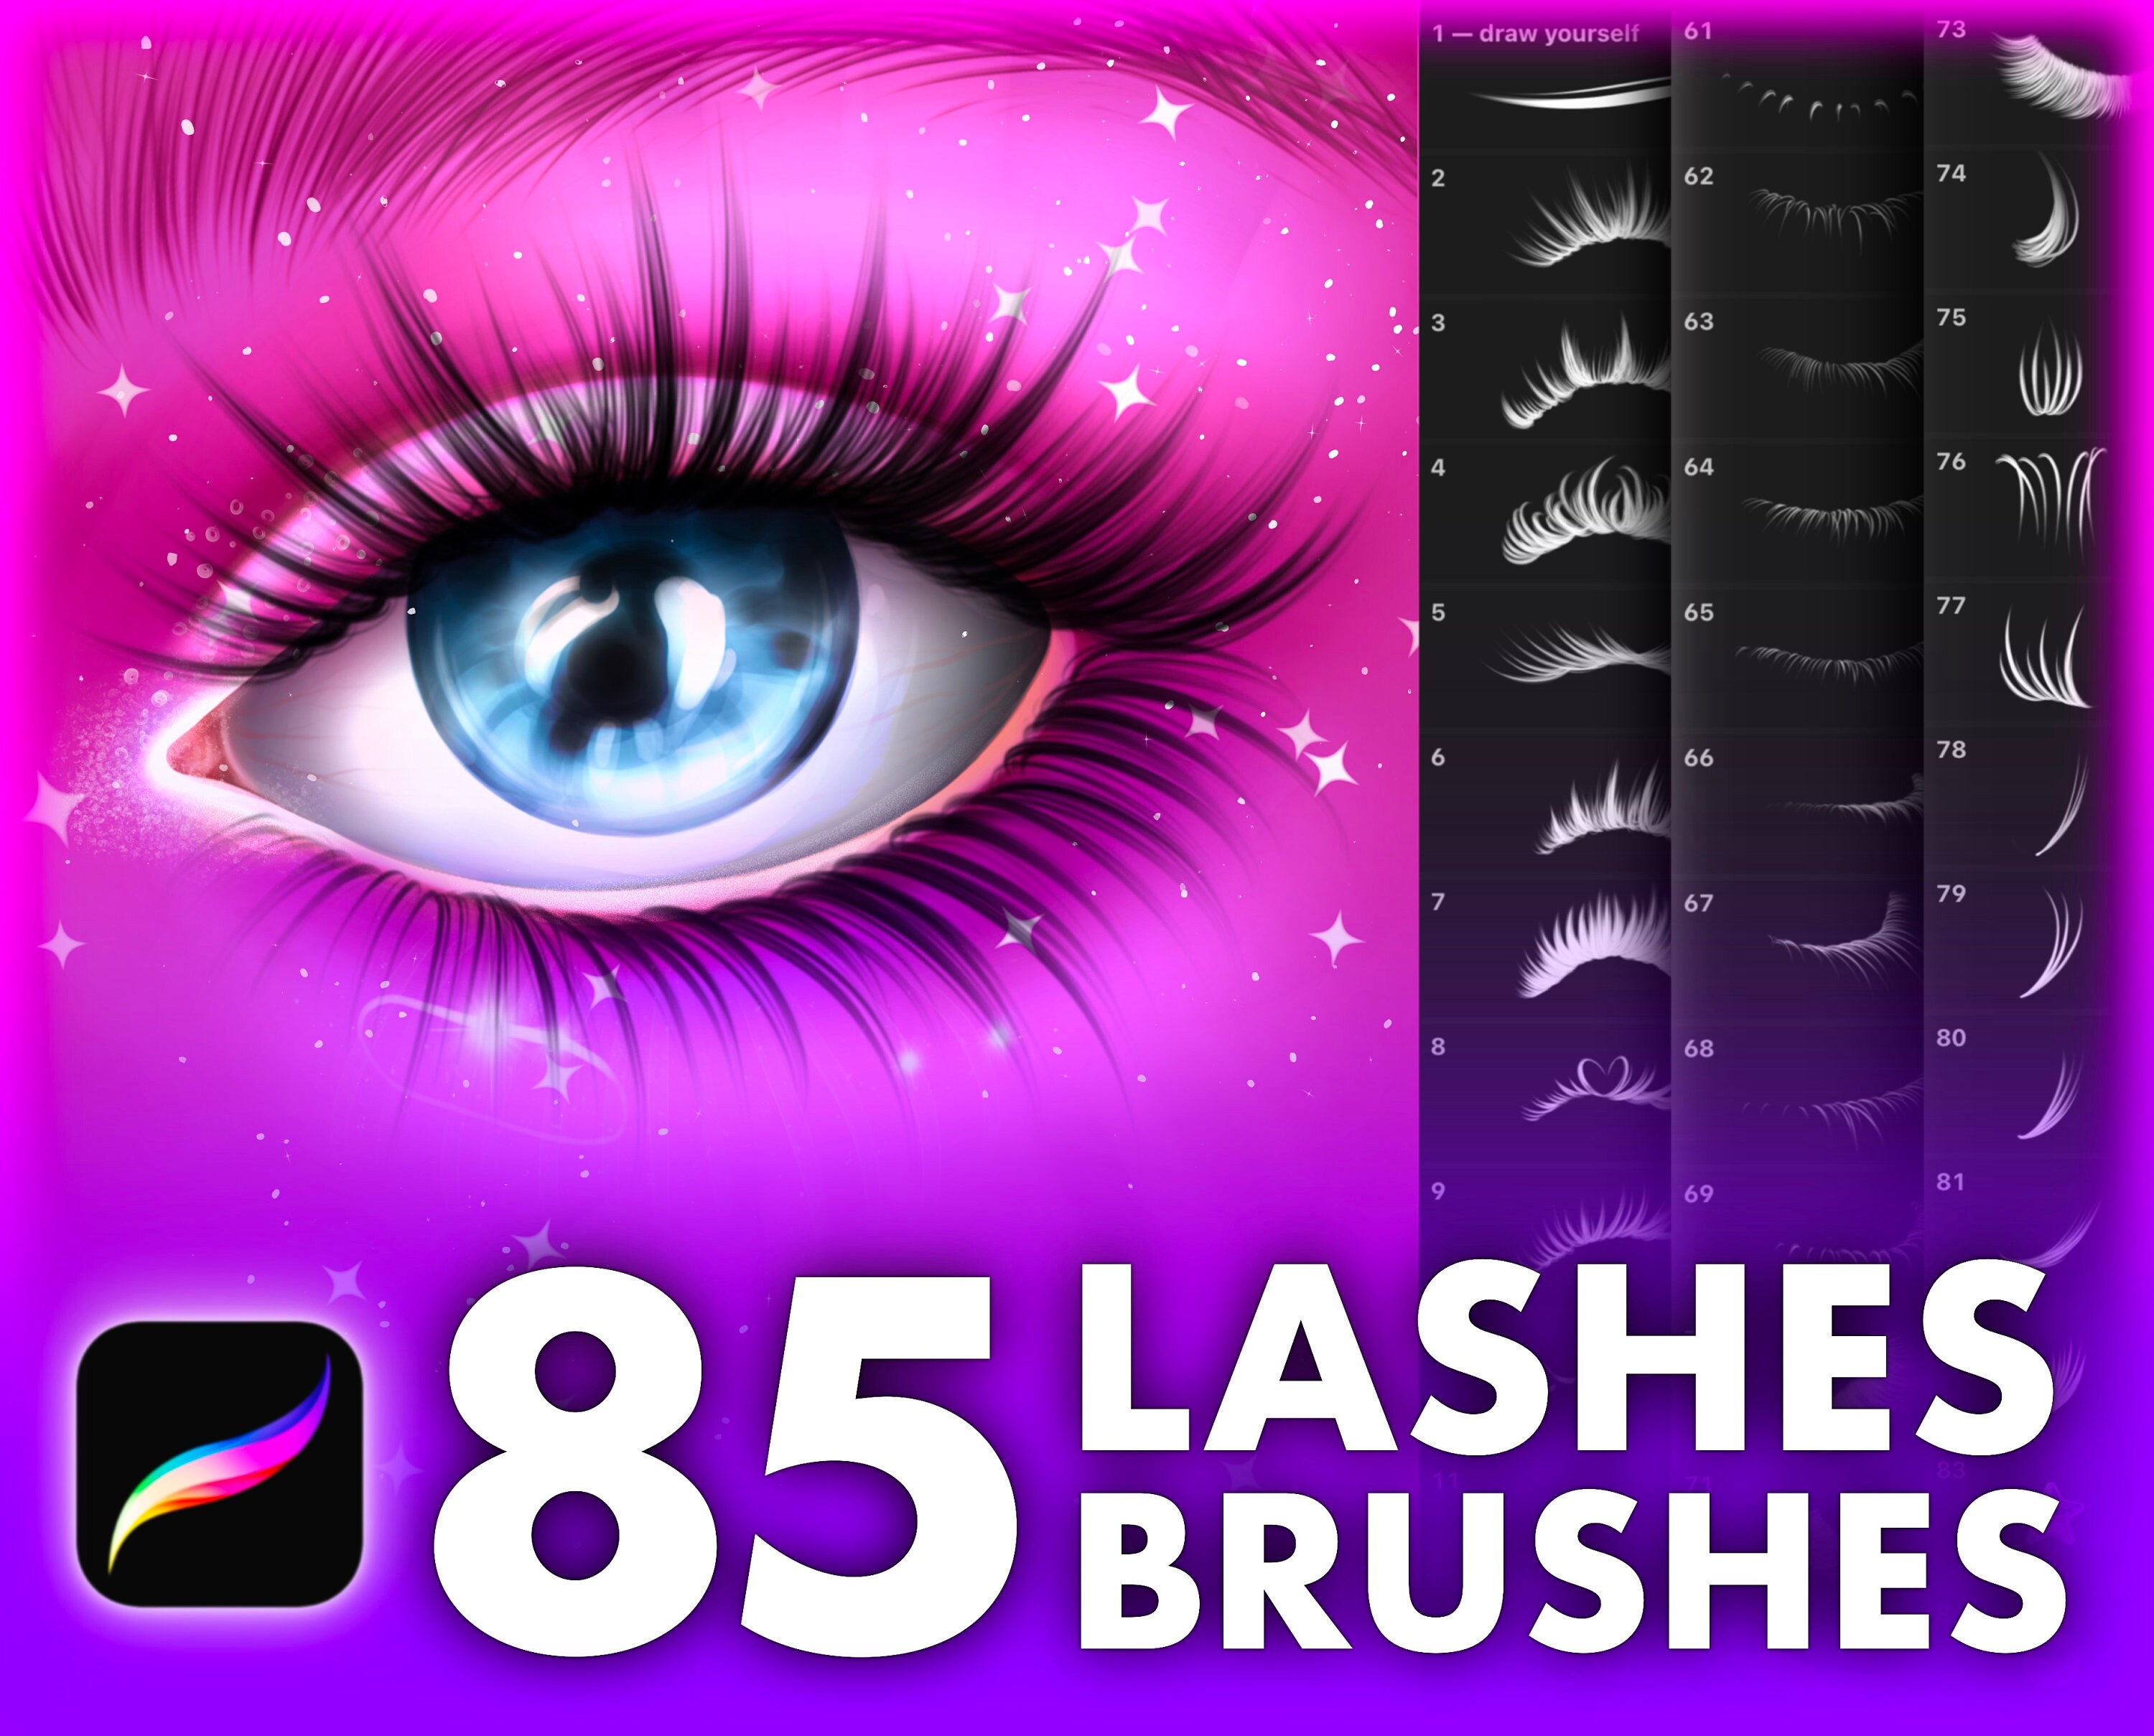 Doll Eyelashes, Wispy Blond Lashes, 1 Inch, Limited Edition